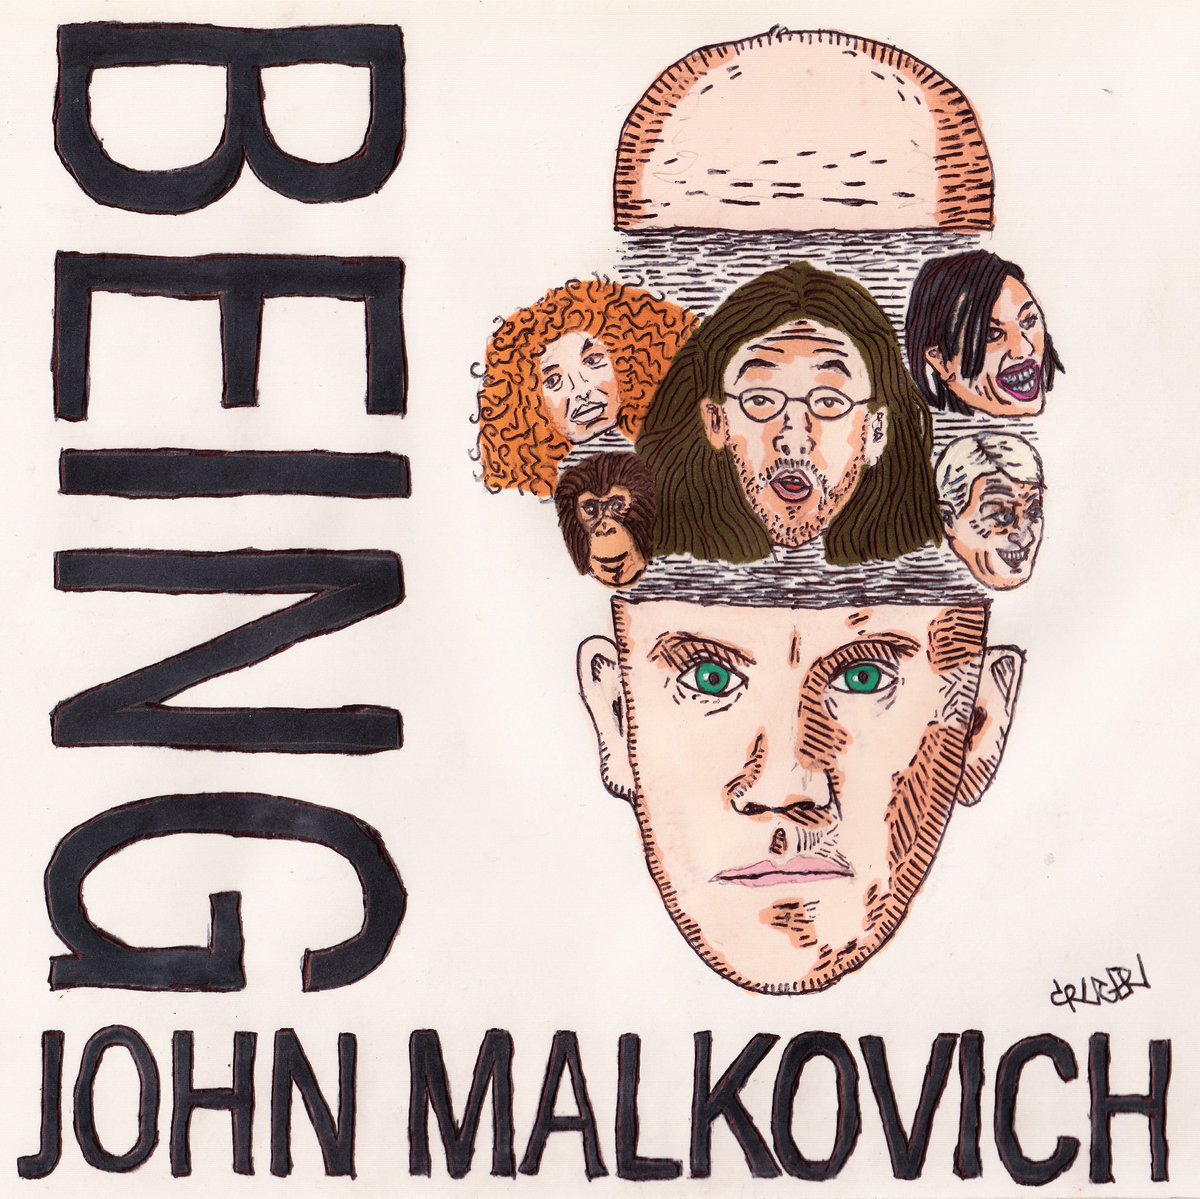 8. Being John Malkovich (1999)